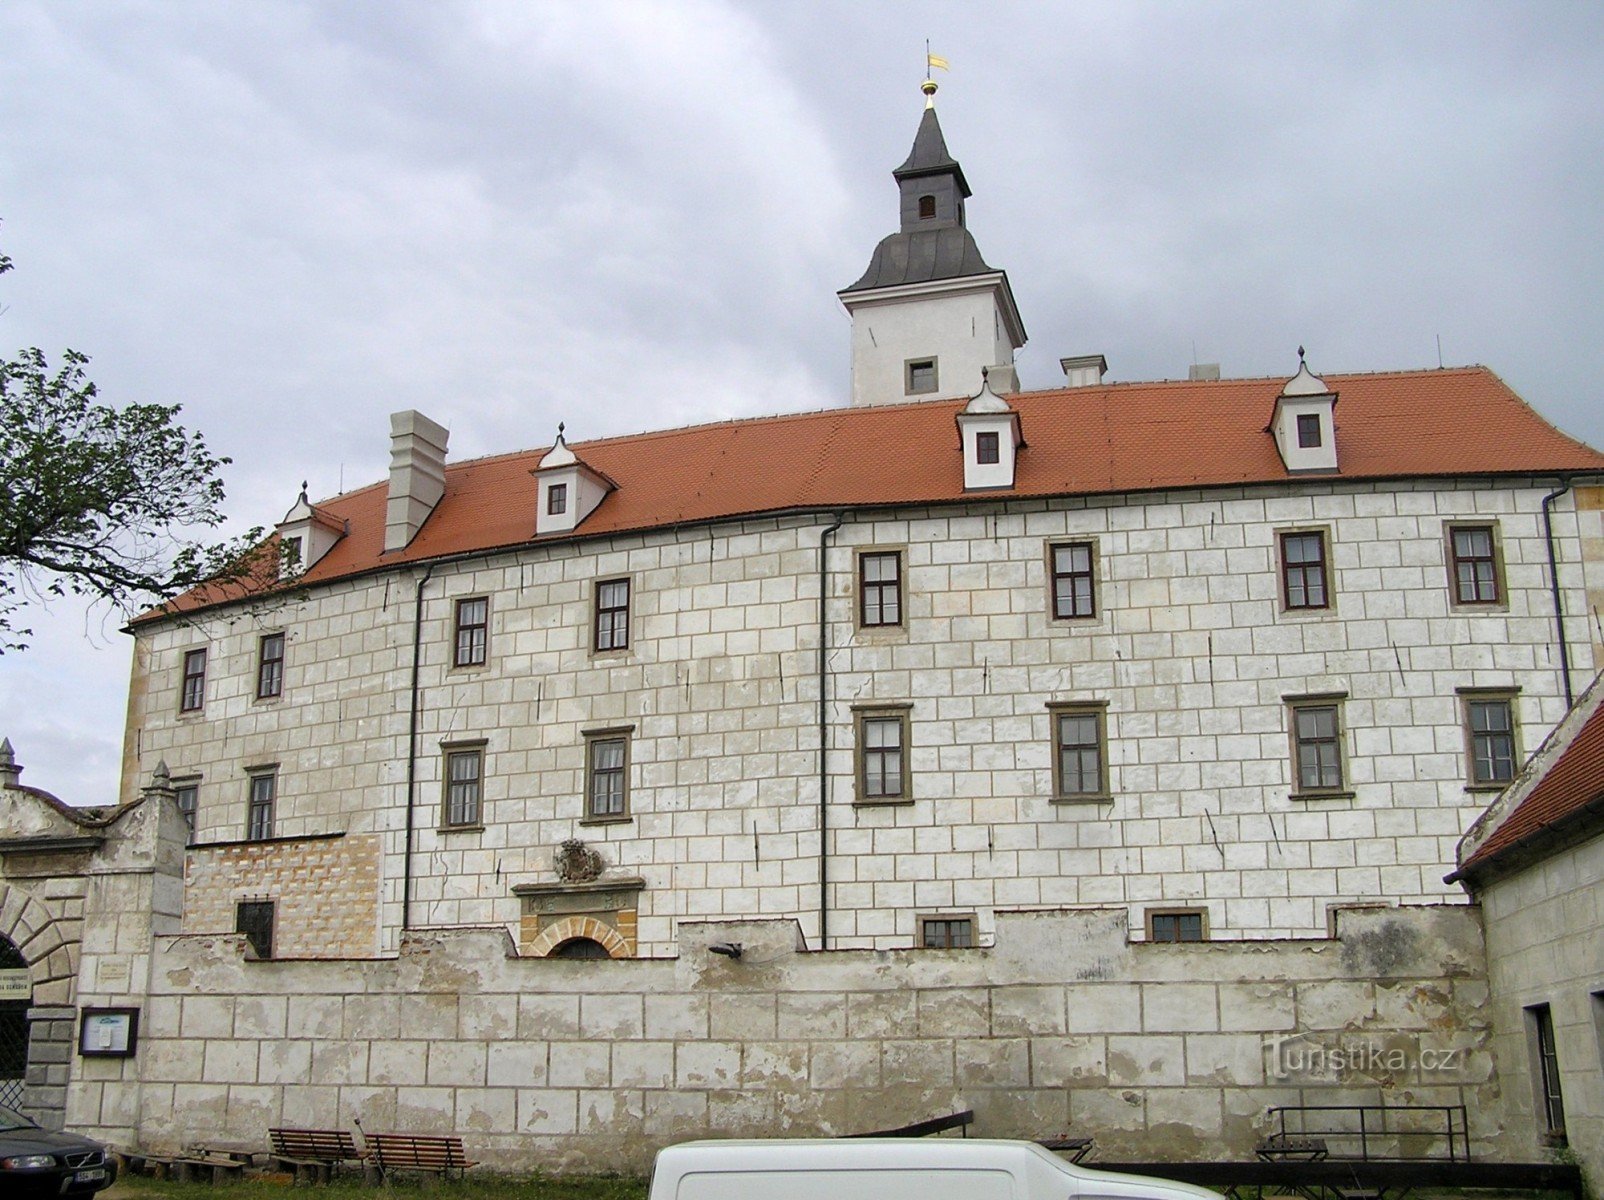 Jevišoice - Старий замок (серпень 2006)